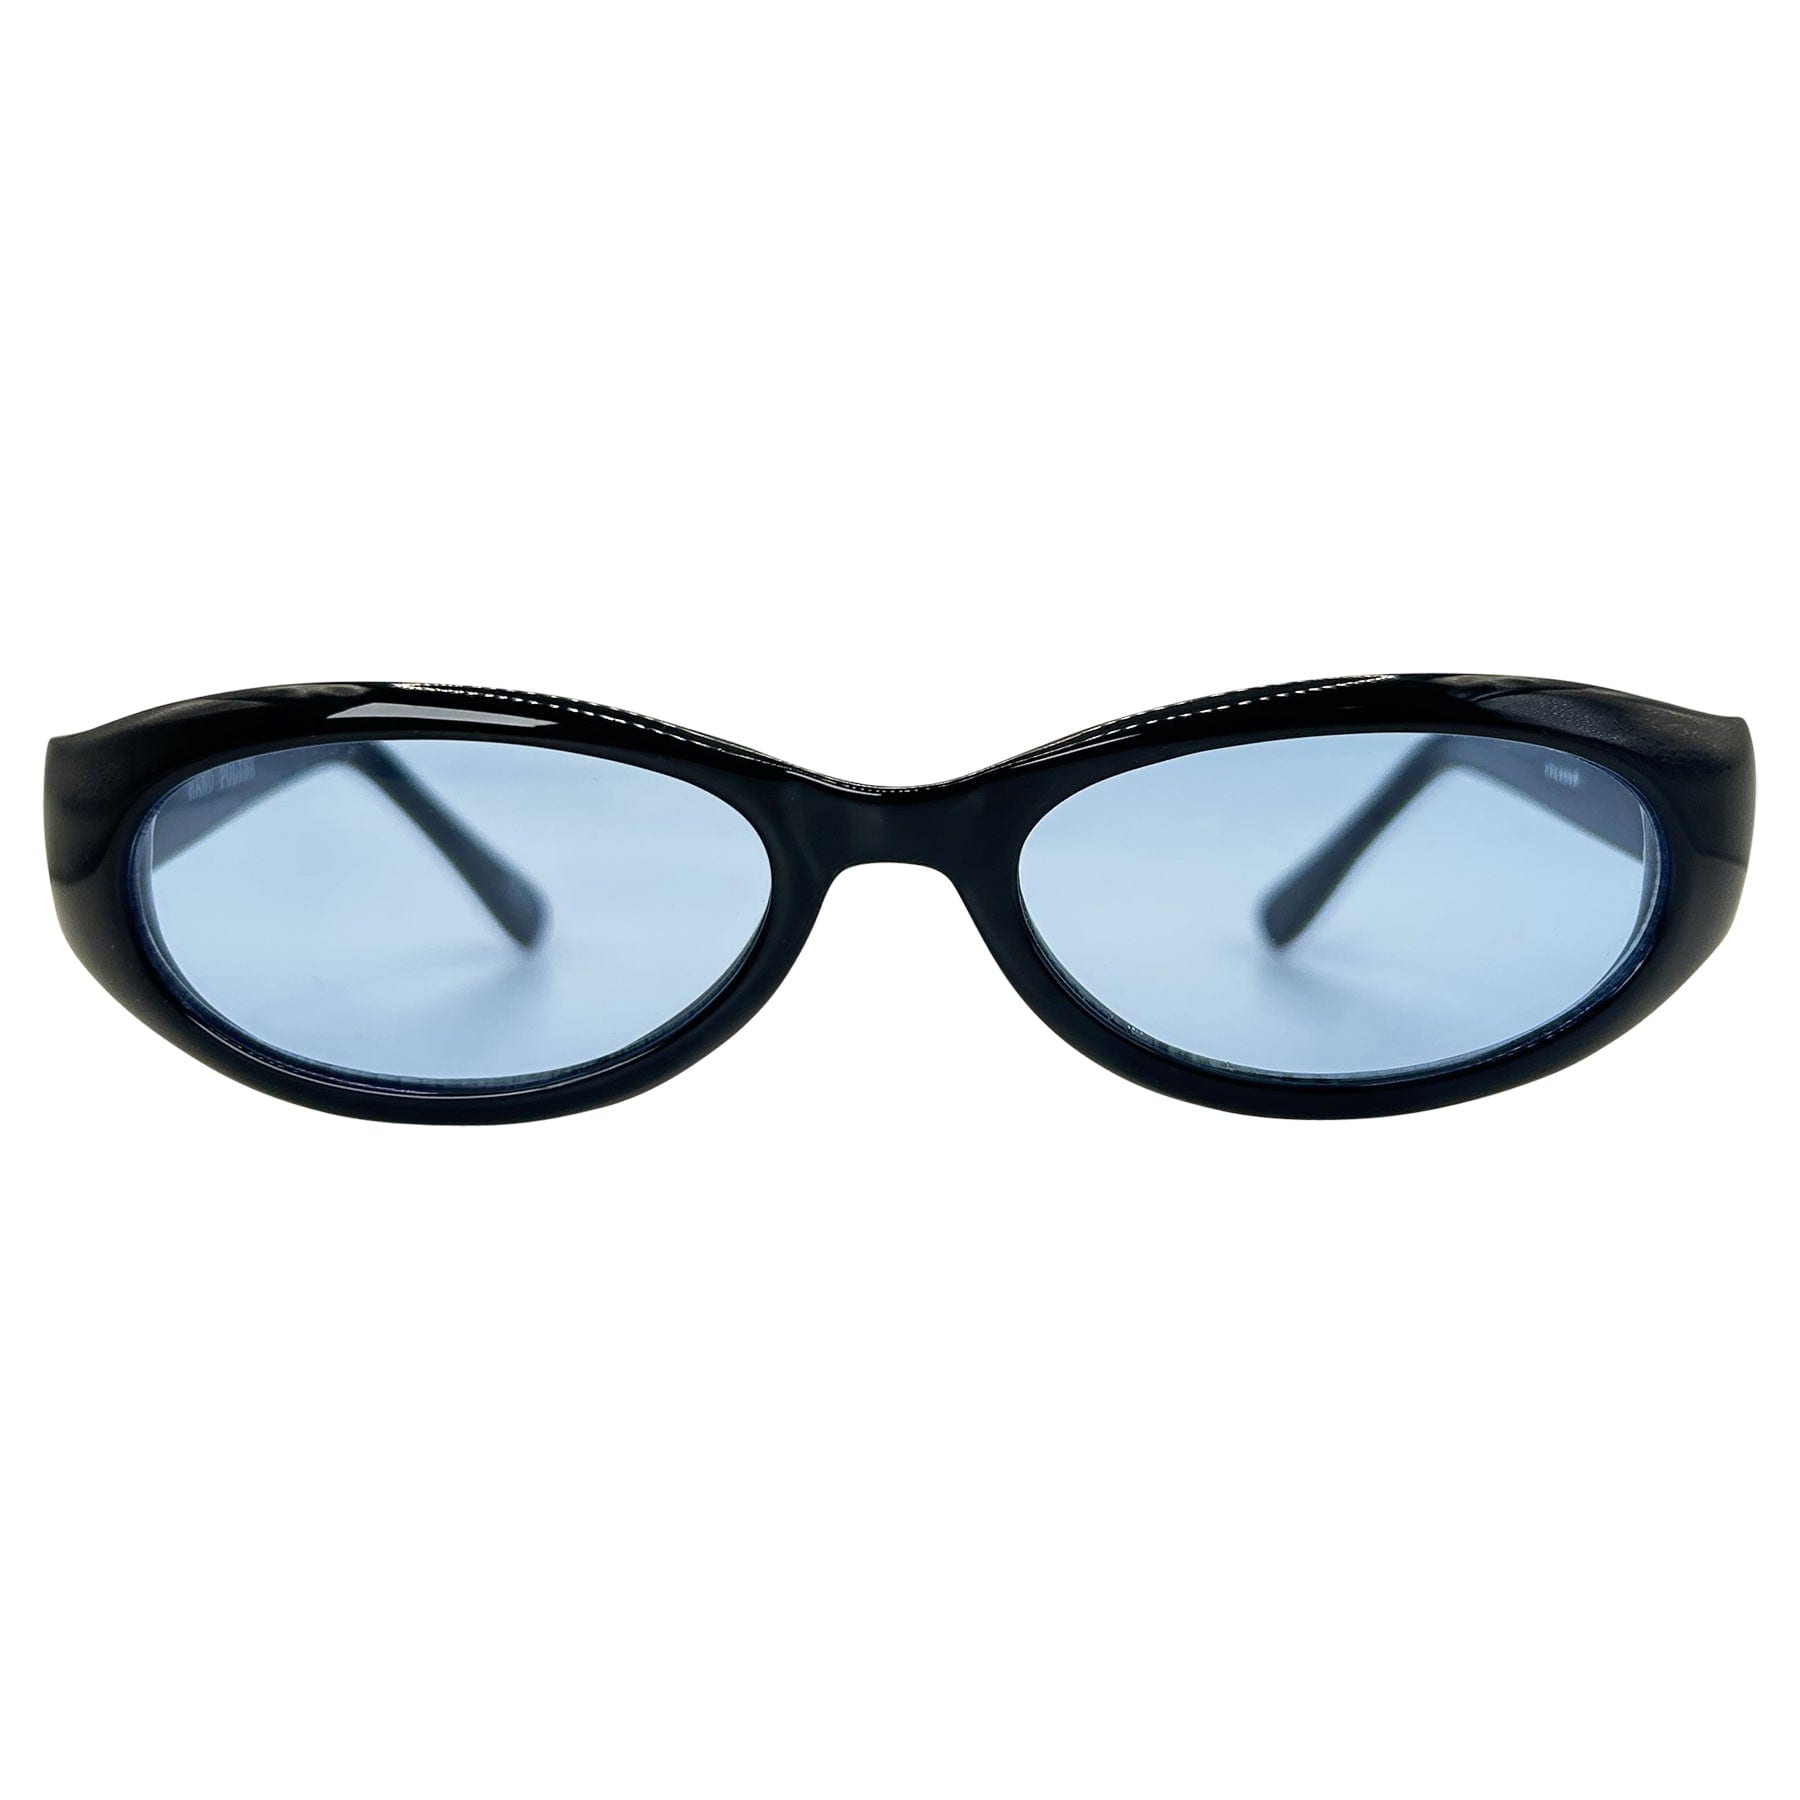 mens black 90s sunglasses with a blue lens